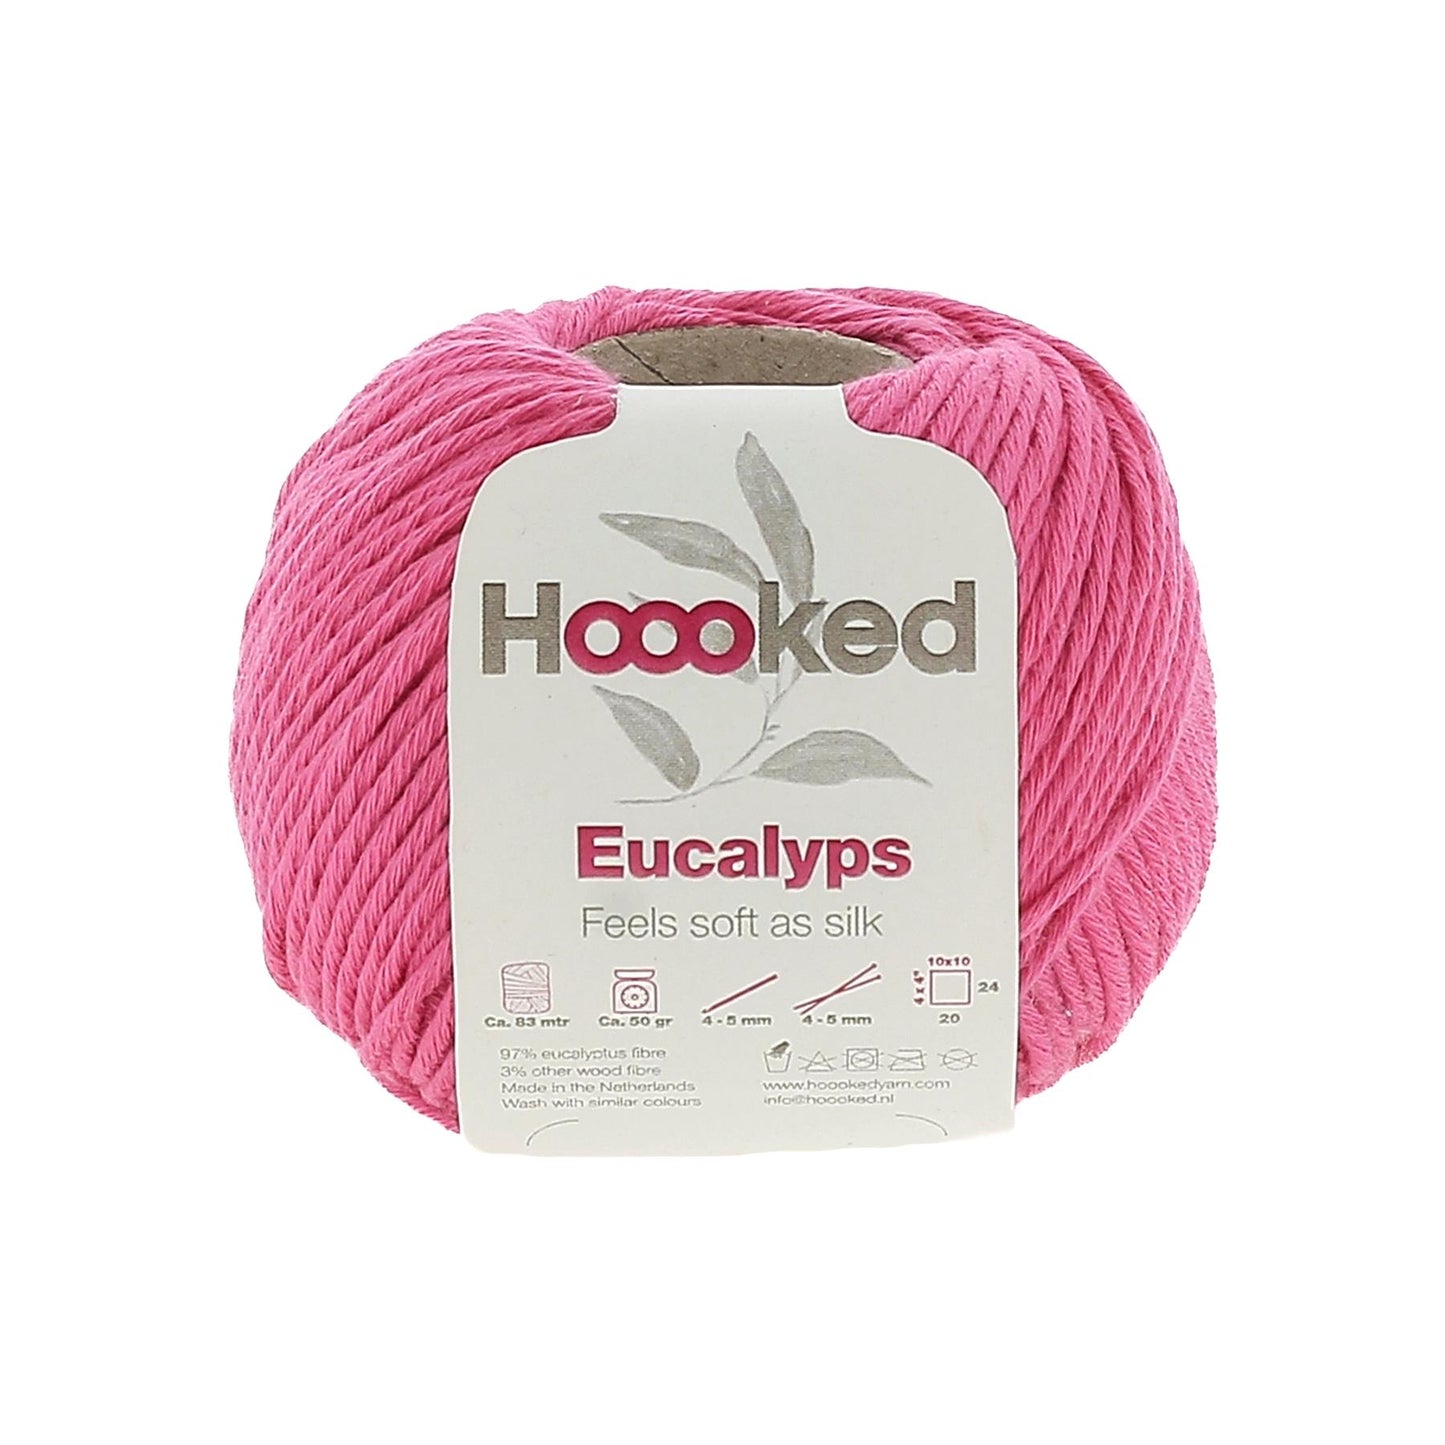 [Hoooked] EC0750G Eucalyps Magenta Pink Eucalyptus Yarn - 82.5M, 50g